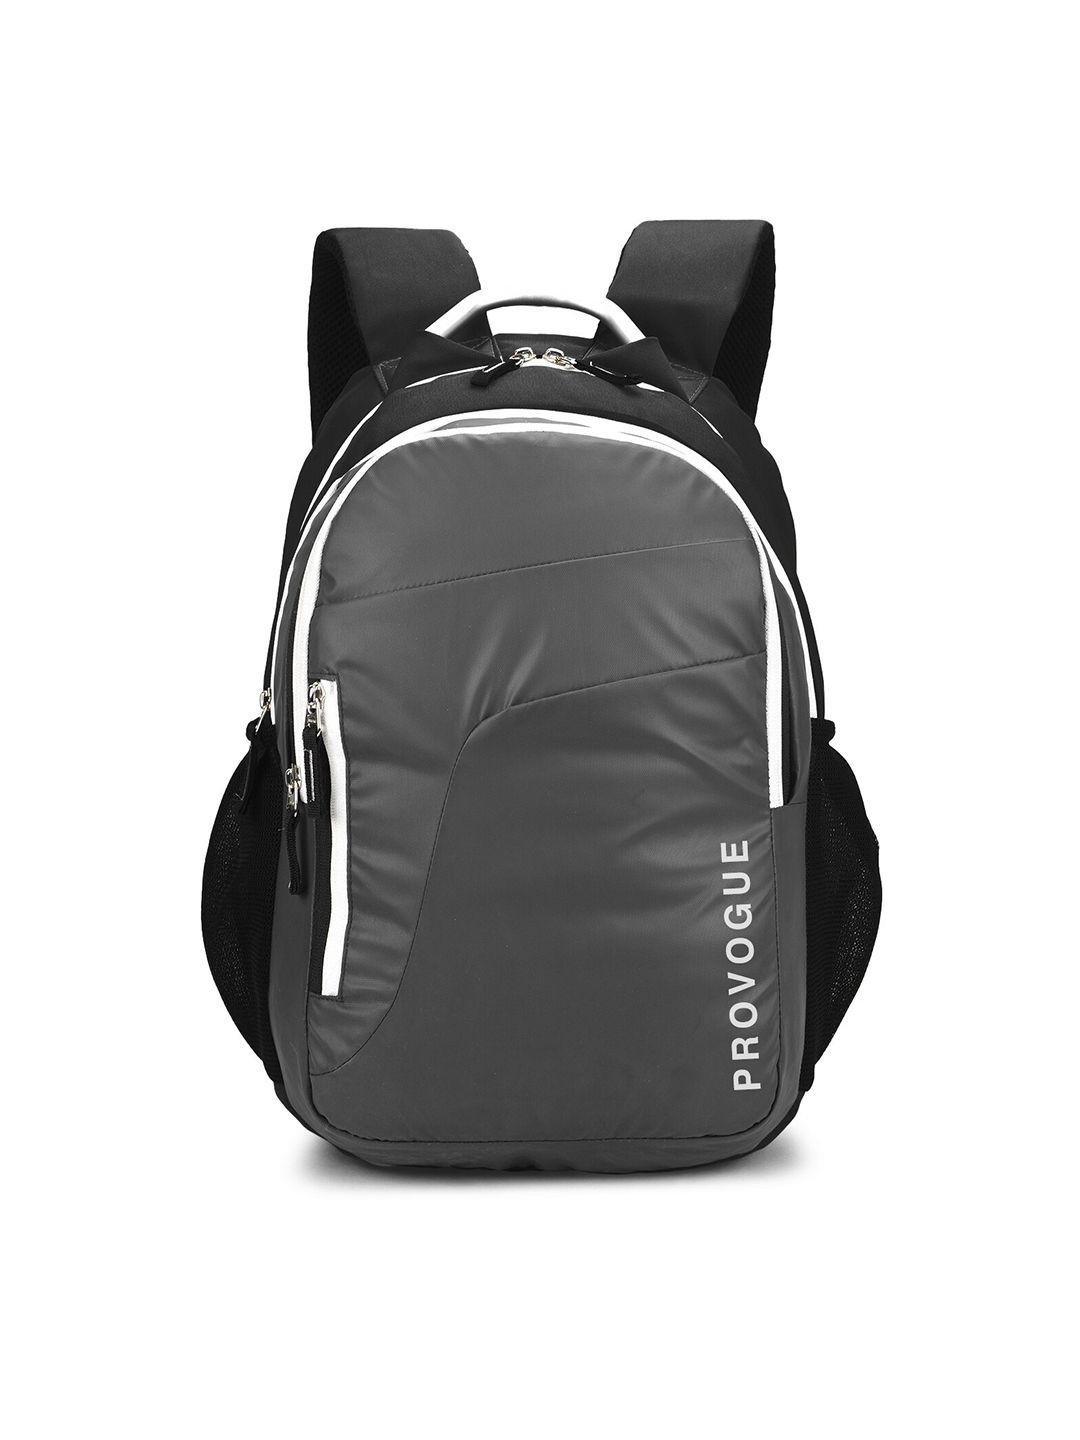 provogue unisex grey & black solid brand logo backpack with alluminium handle